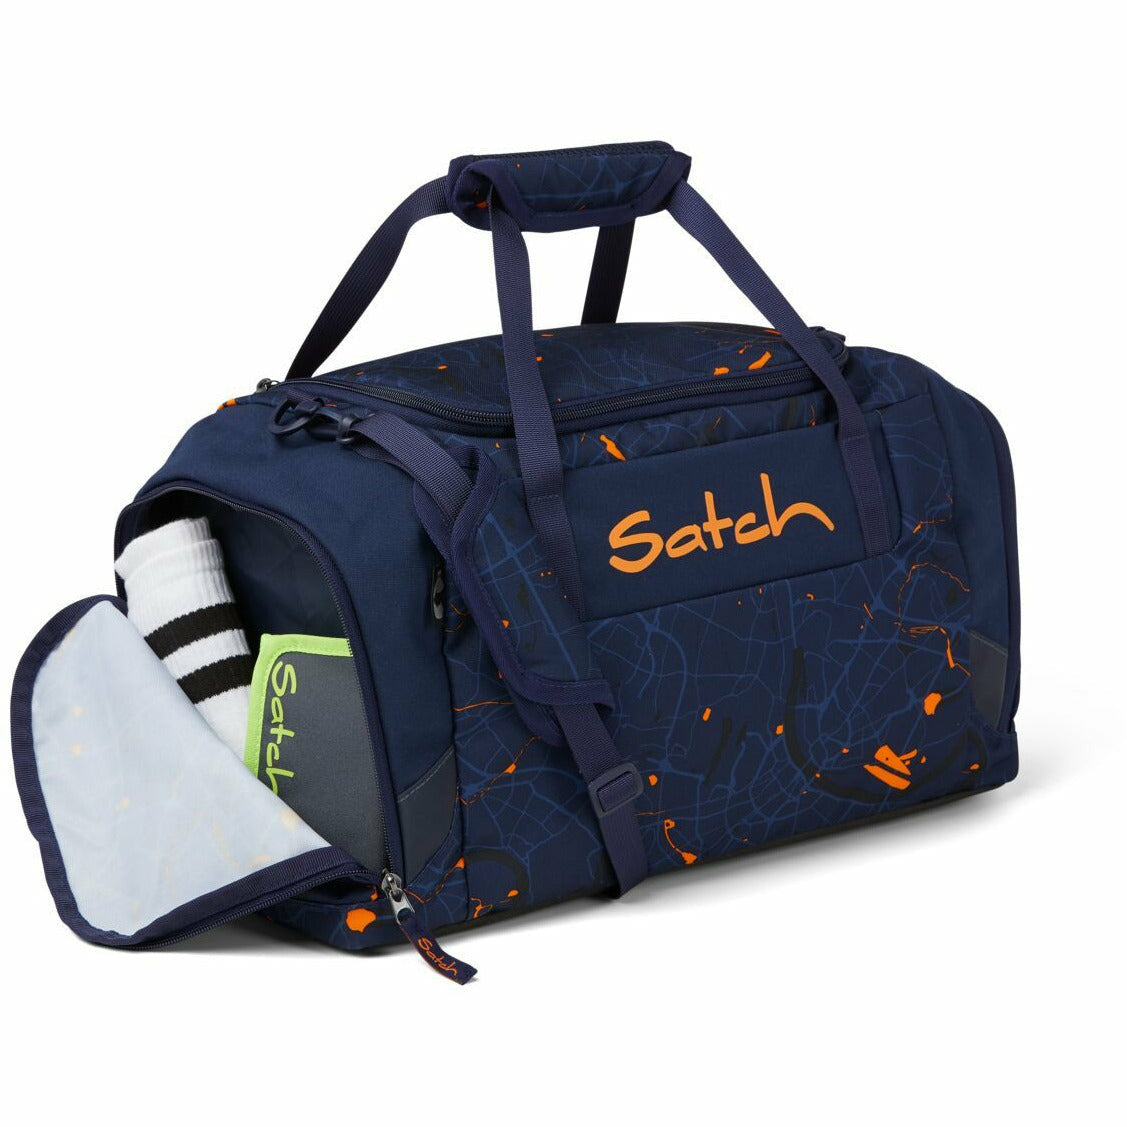 satch | satch Duffle Bag | Urban Journey